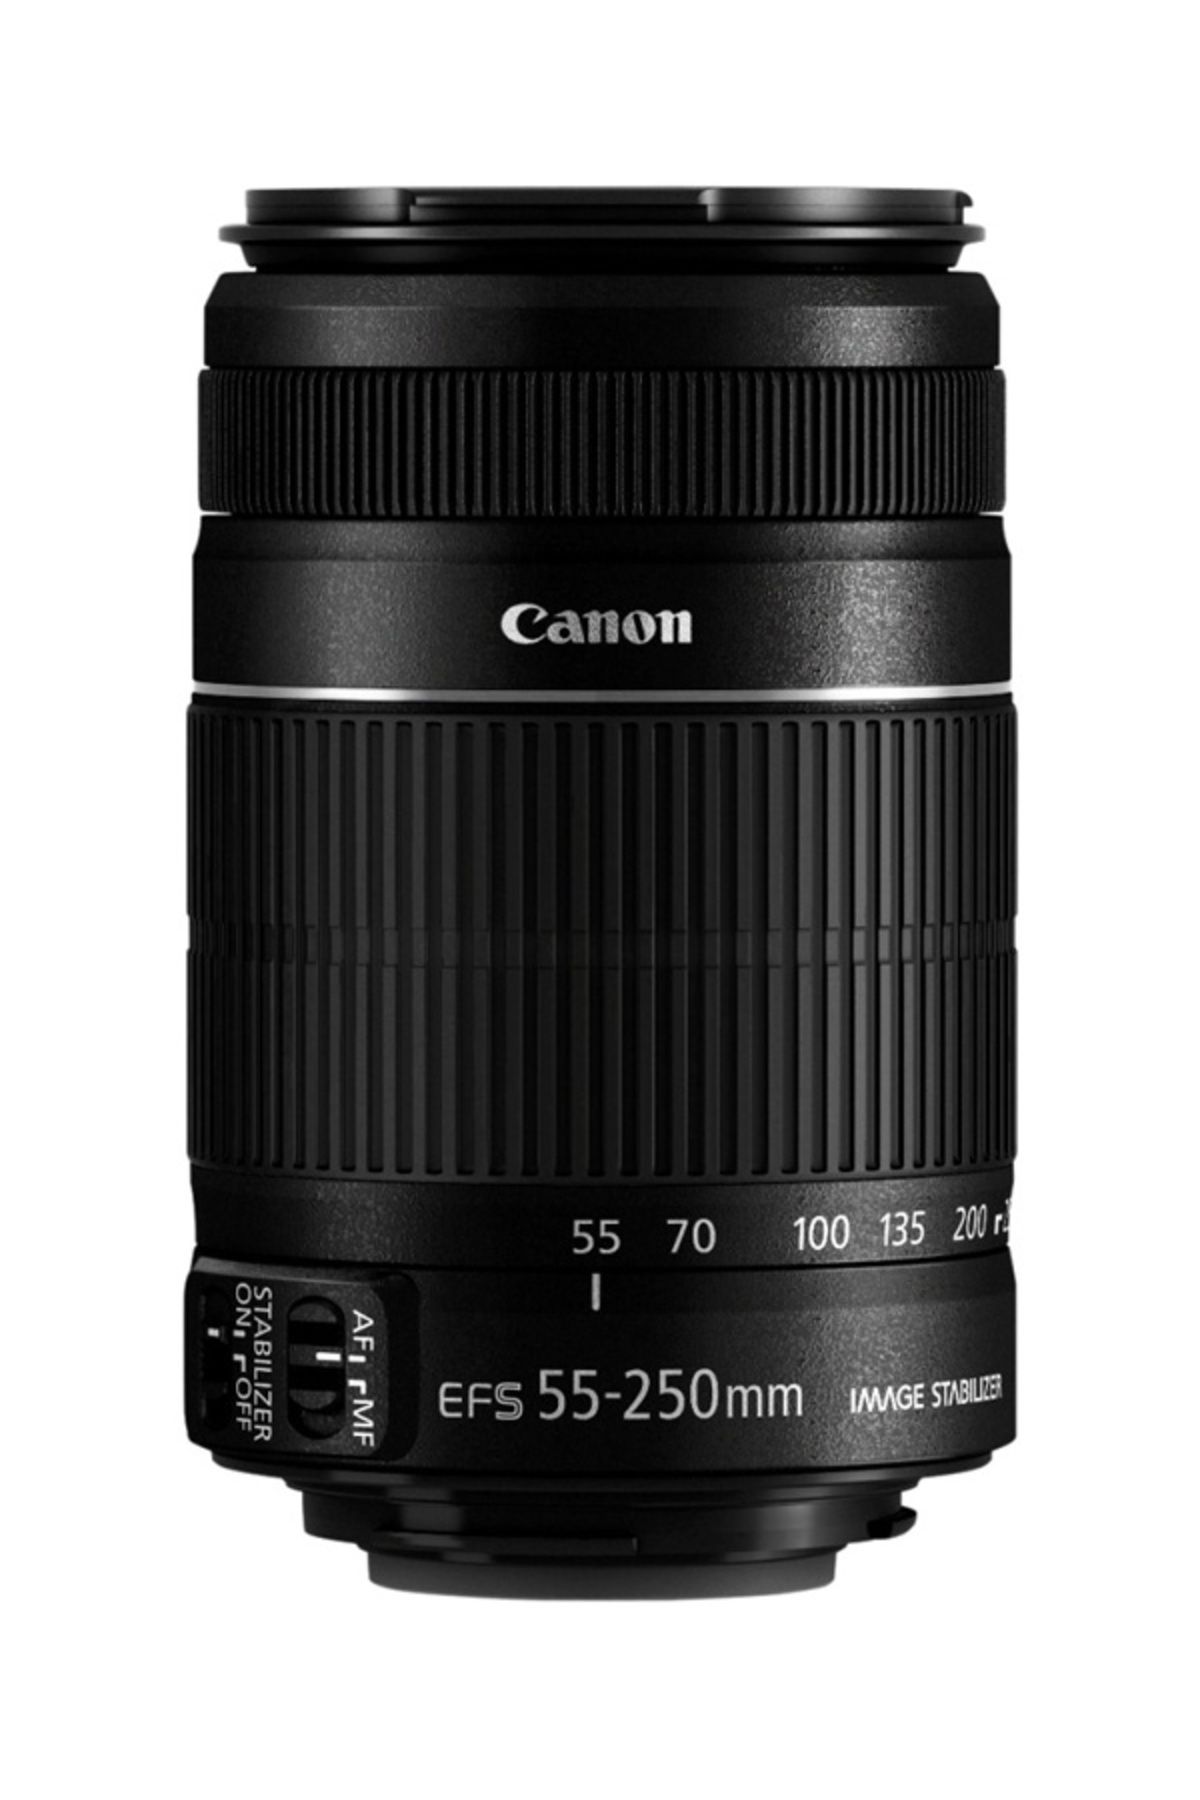 Canon EF-S 55-250mm IS II LENS